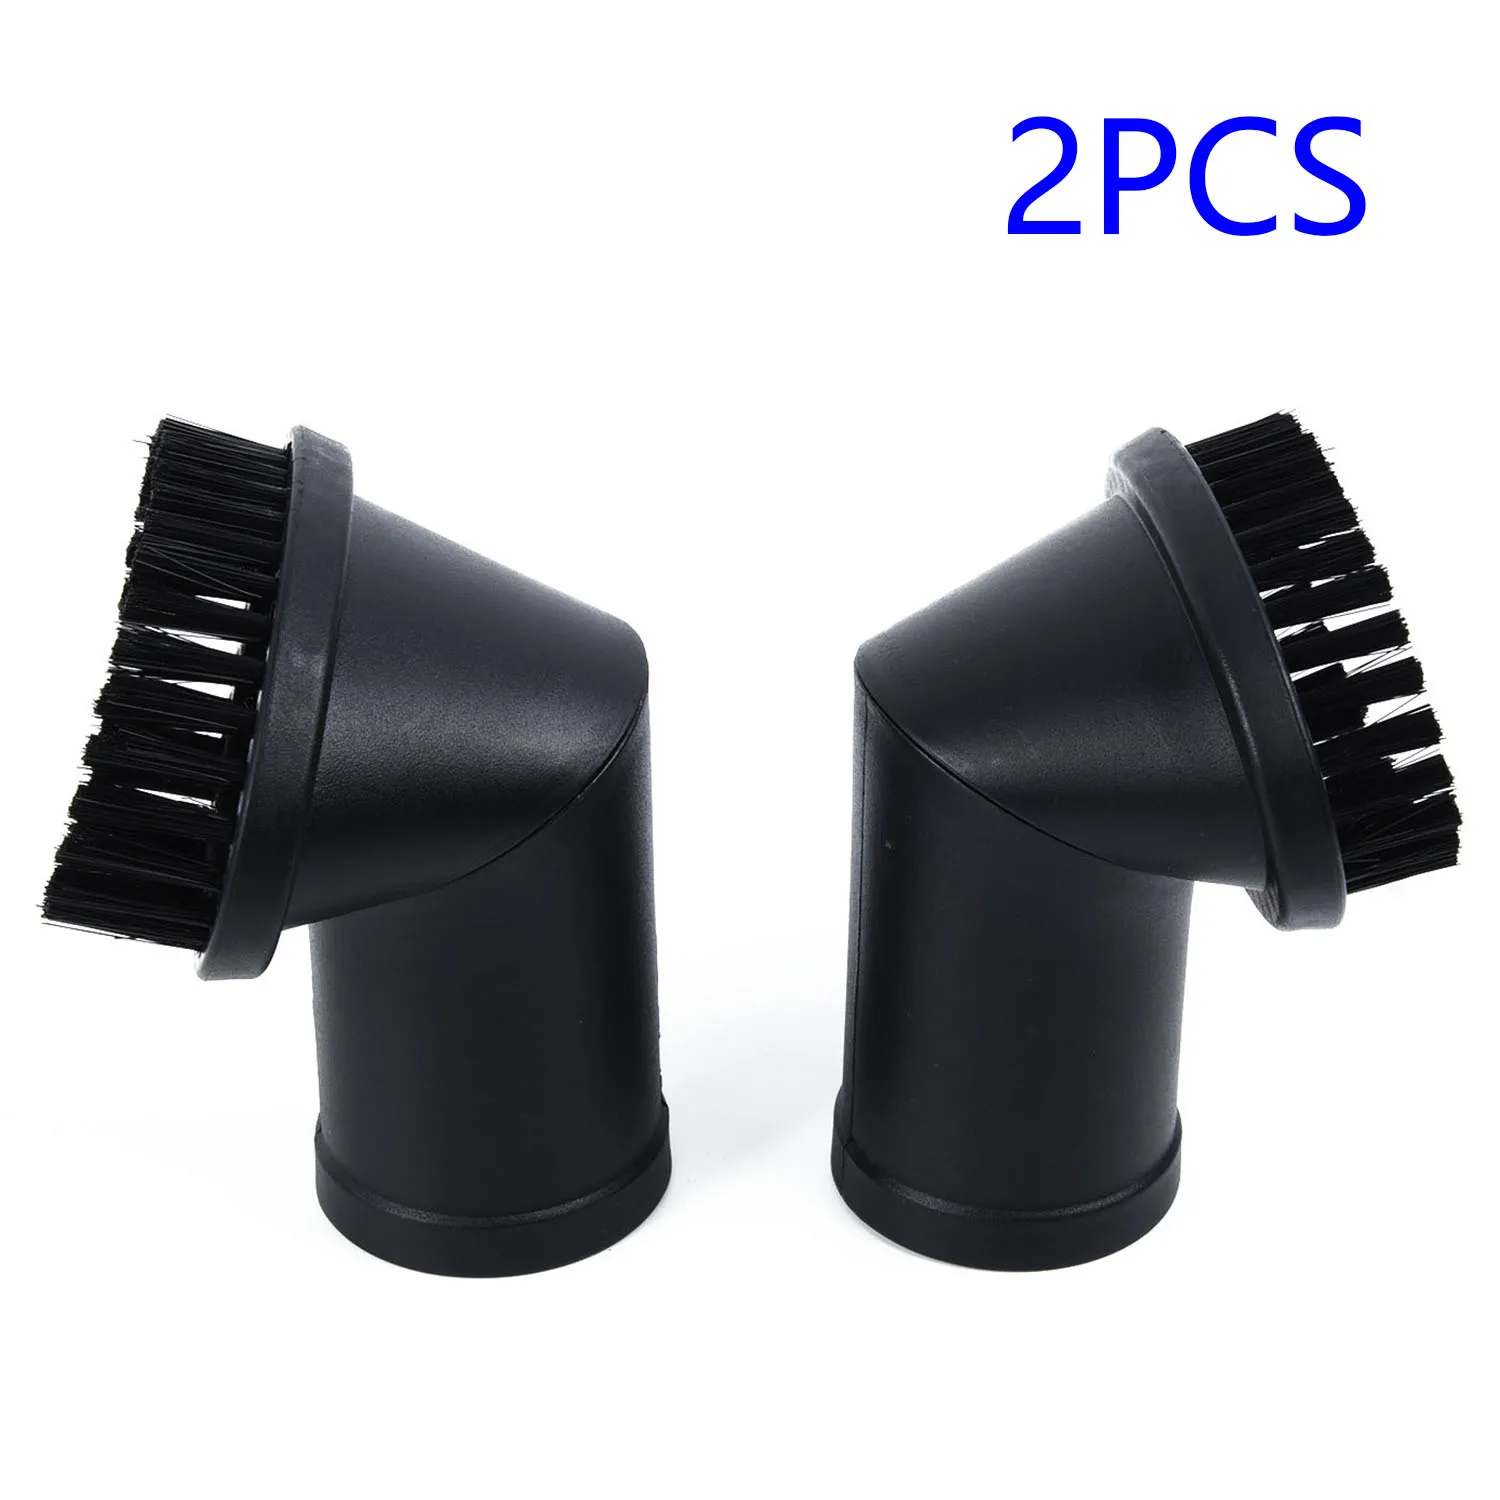 

2pcs Rotating Round Brushes Black Vacuum Cleaner Parts Attachment Round Dust Brush Bristle Brush Head 35mm Cleaning Tools